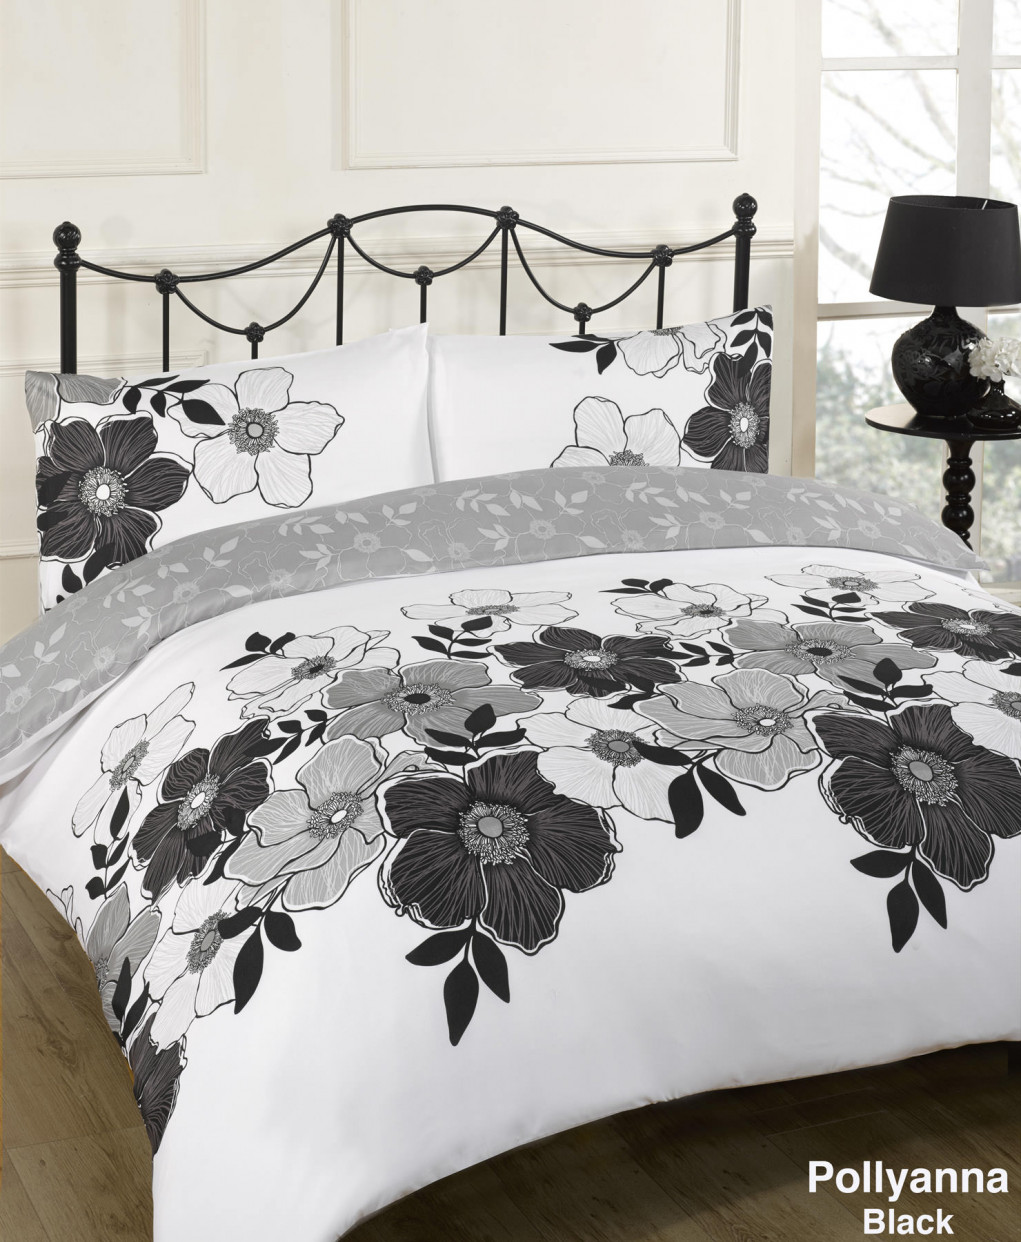 Dreamscene Pollyanna Black Floral Duvet Quilt Cover Bedding Set - Black - Single>